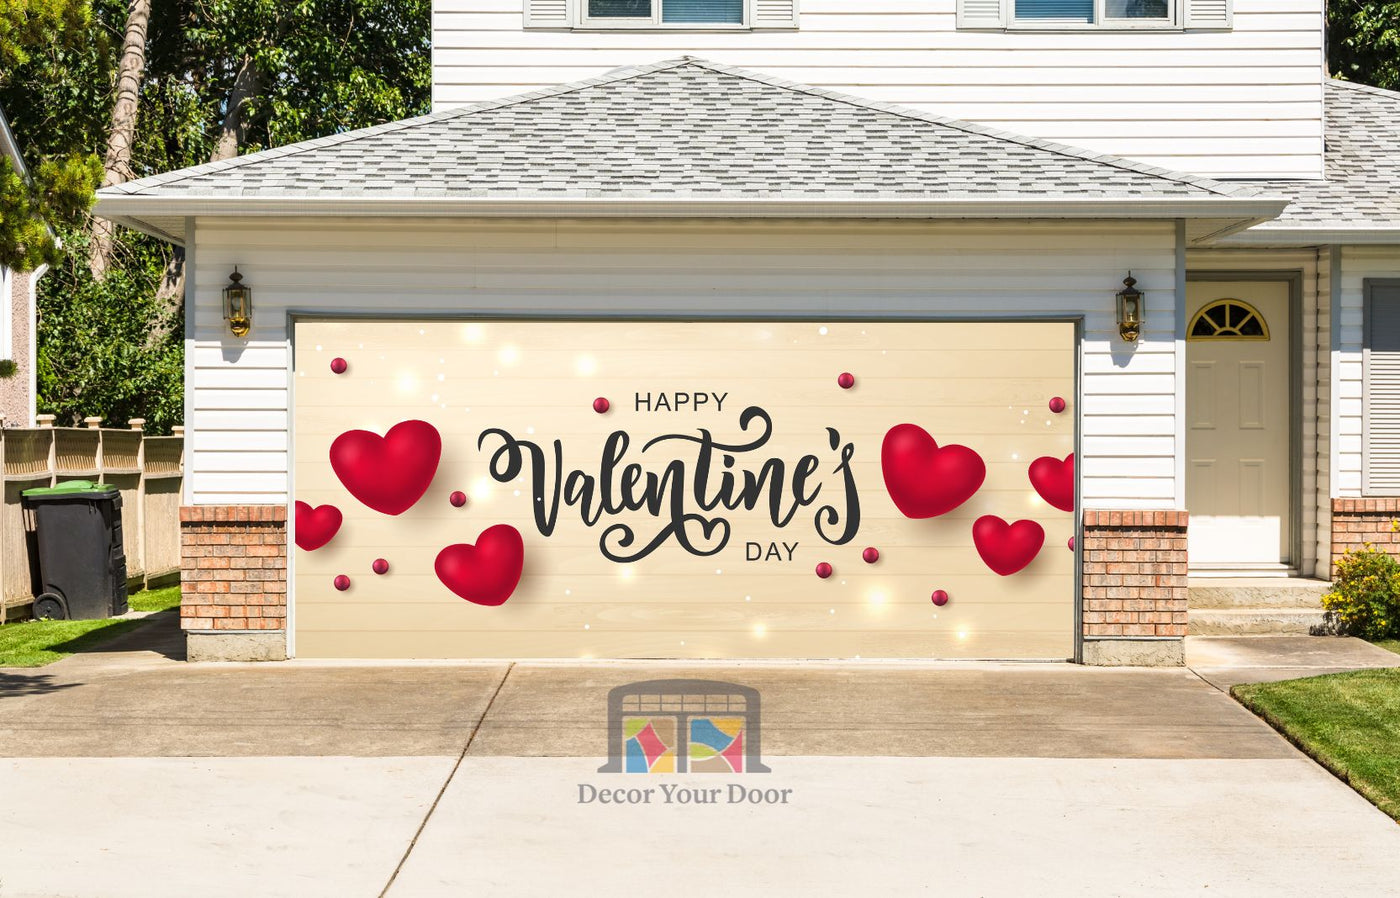 Happy Valentines Day Garage Door Cover Wrap Mural Home Decoration (Design #5)